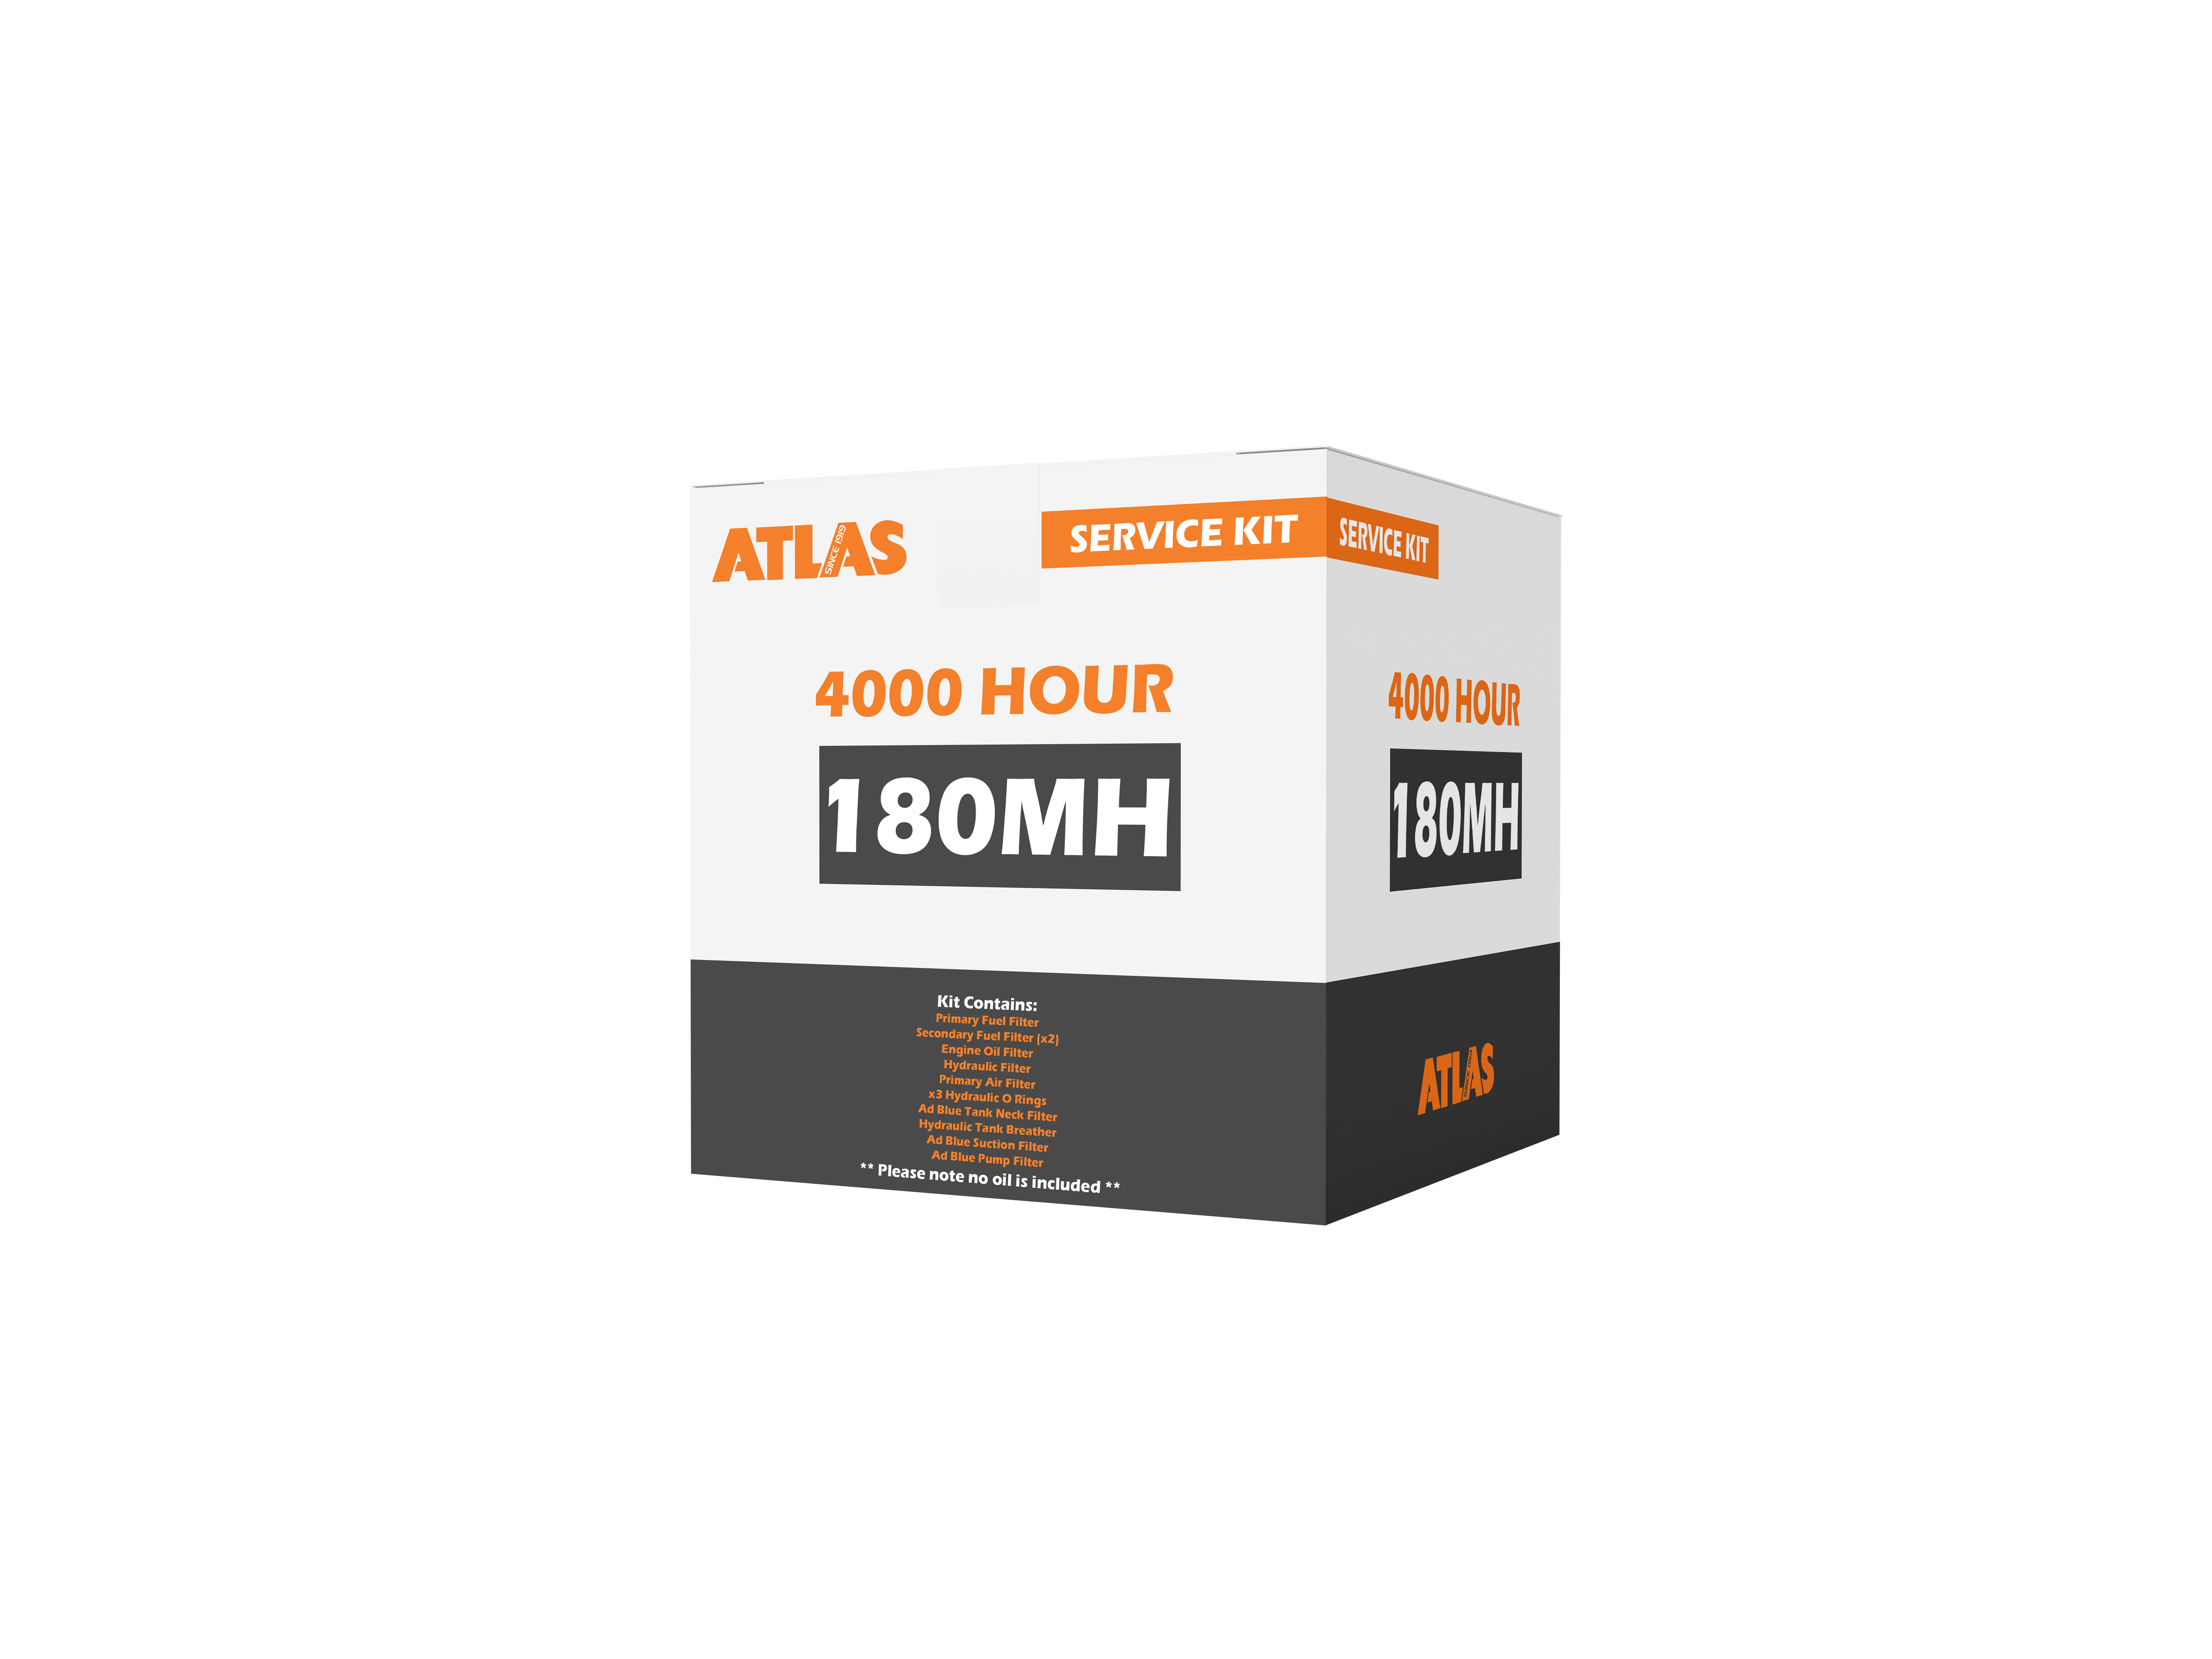 Atlas 180MH 4000 Hour Service Kit